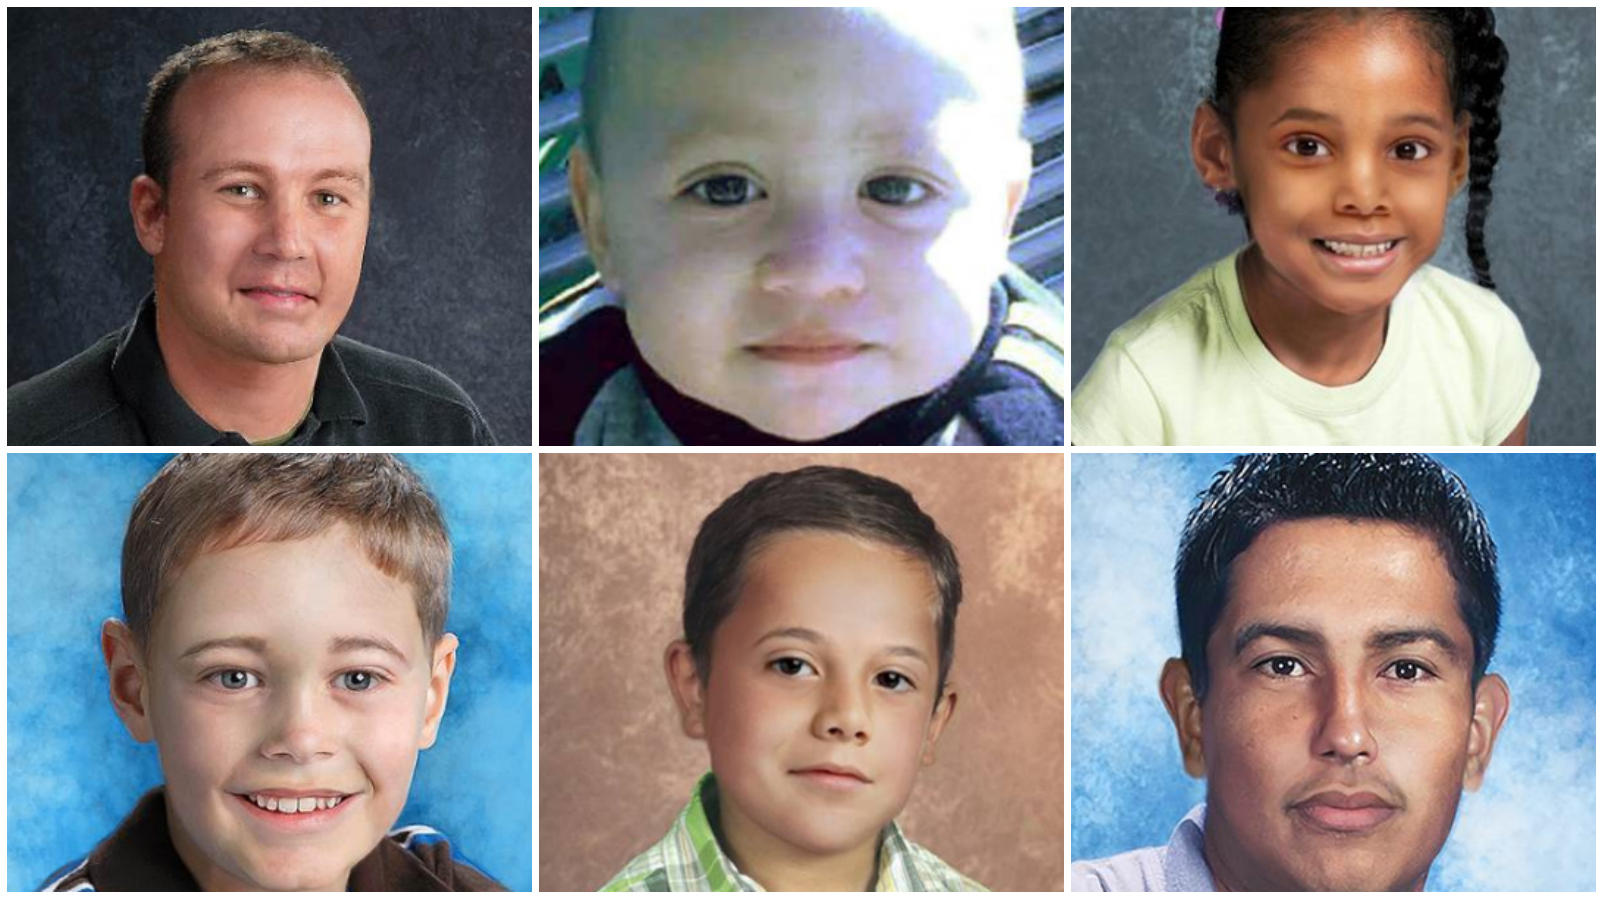 Who are Arizona's missing children?